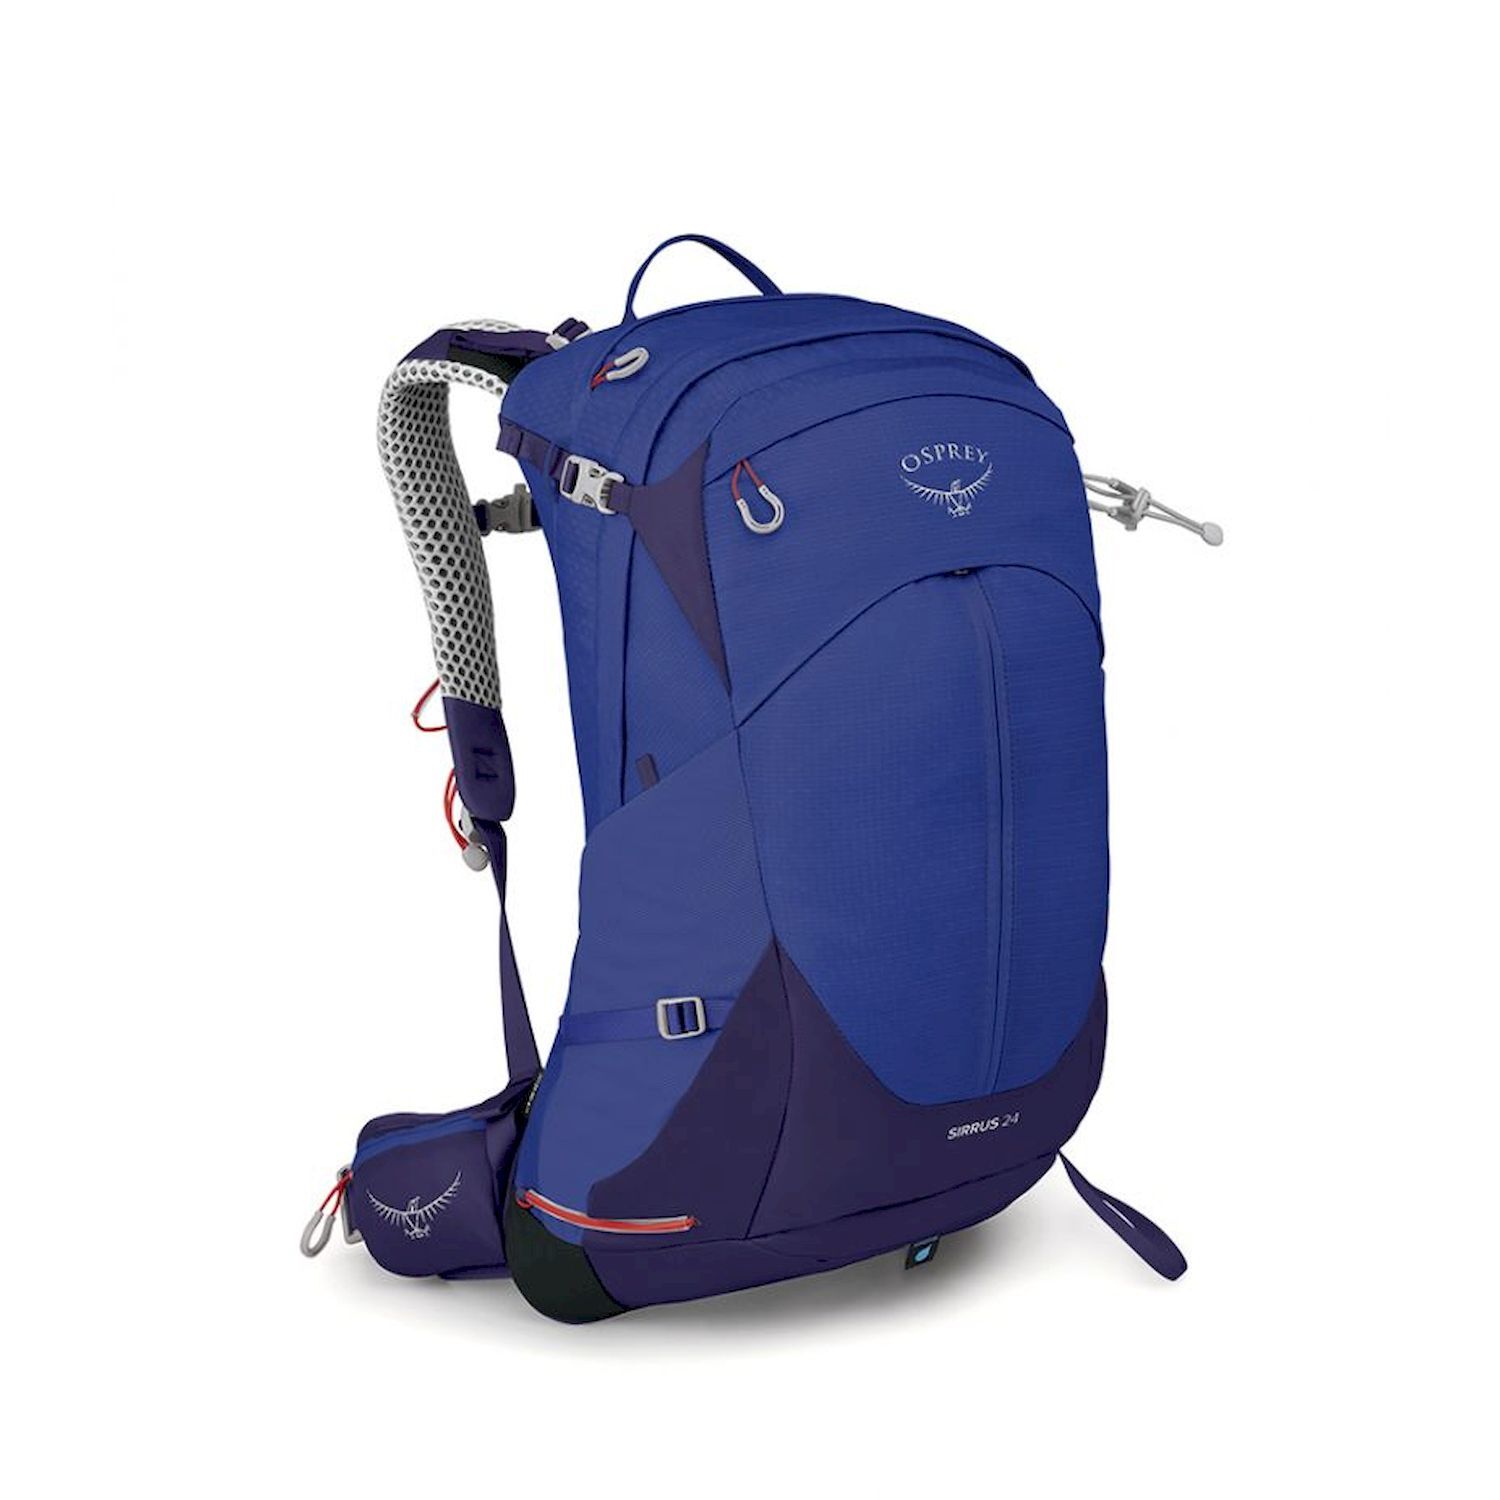 Osprey Sirrus Plus 24 - Walking backpack - Women's